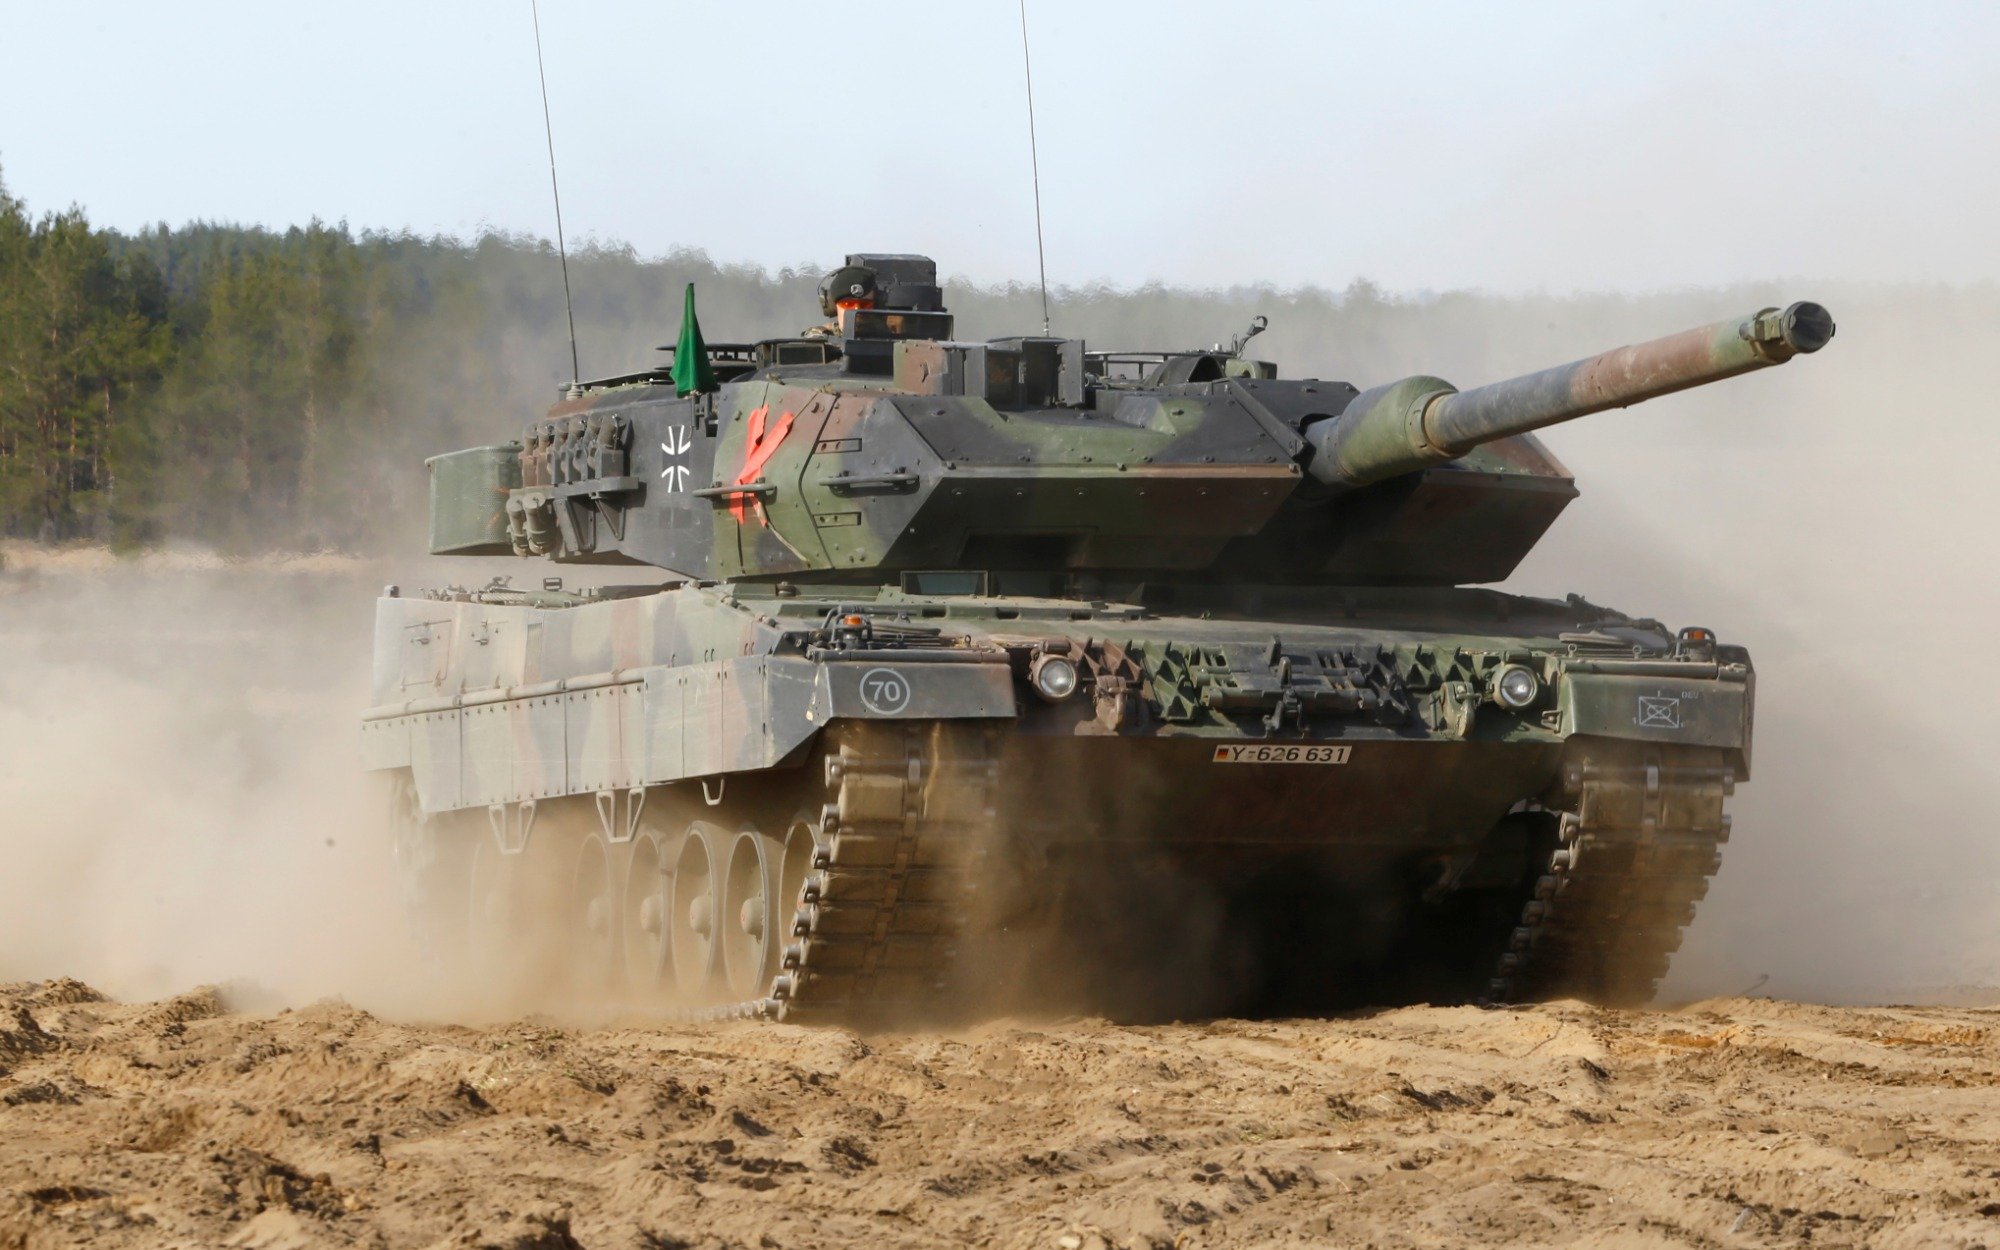 The World's Best Main Battle Tank? The Leopard 2